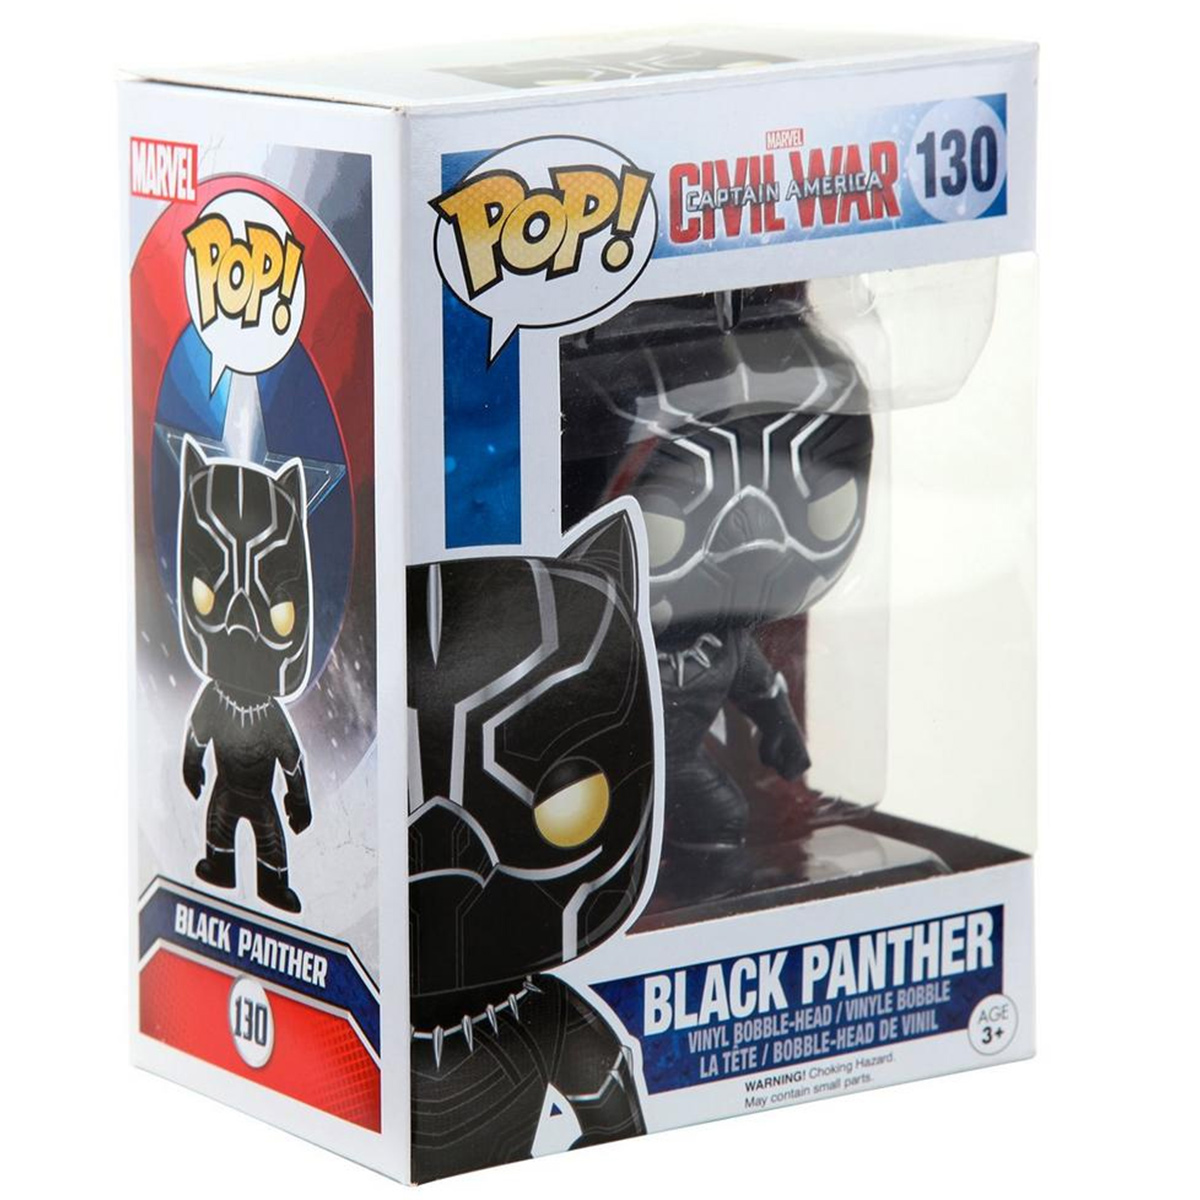 Black Panther #130 - Captain America: Civil War - Funko Pop! Marvel